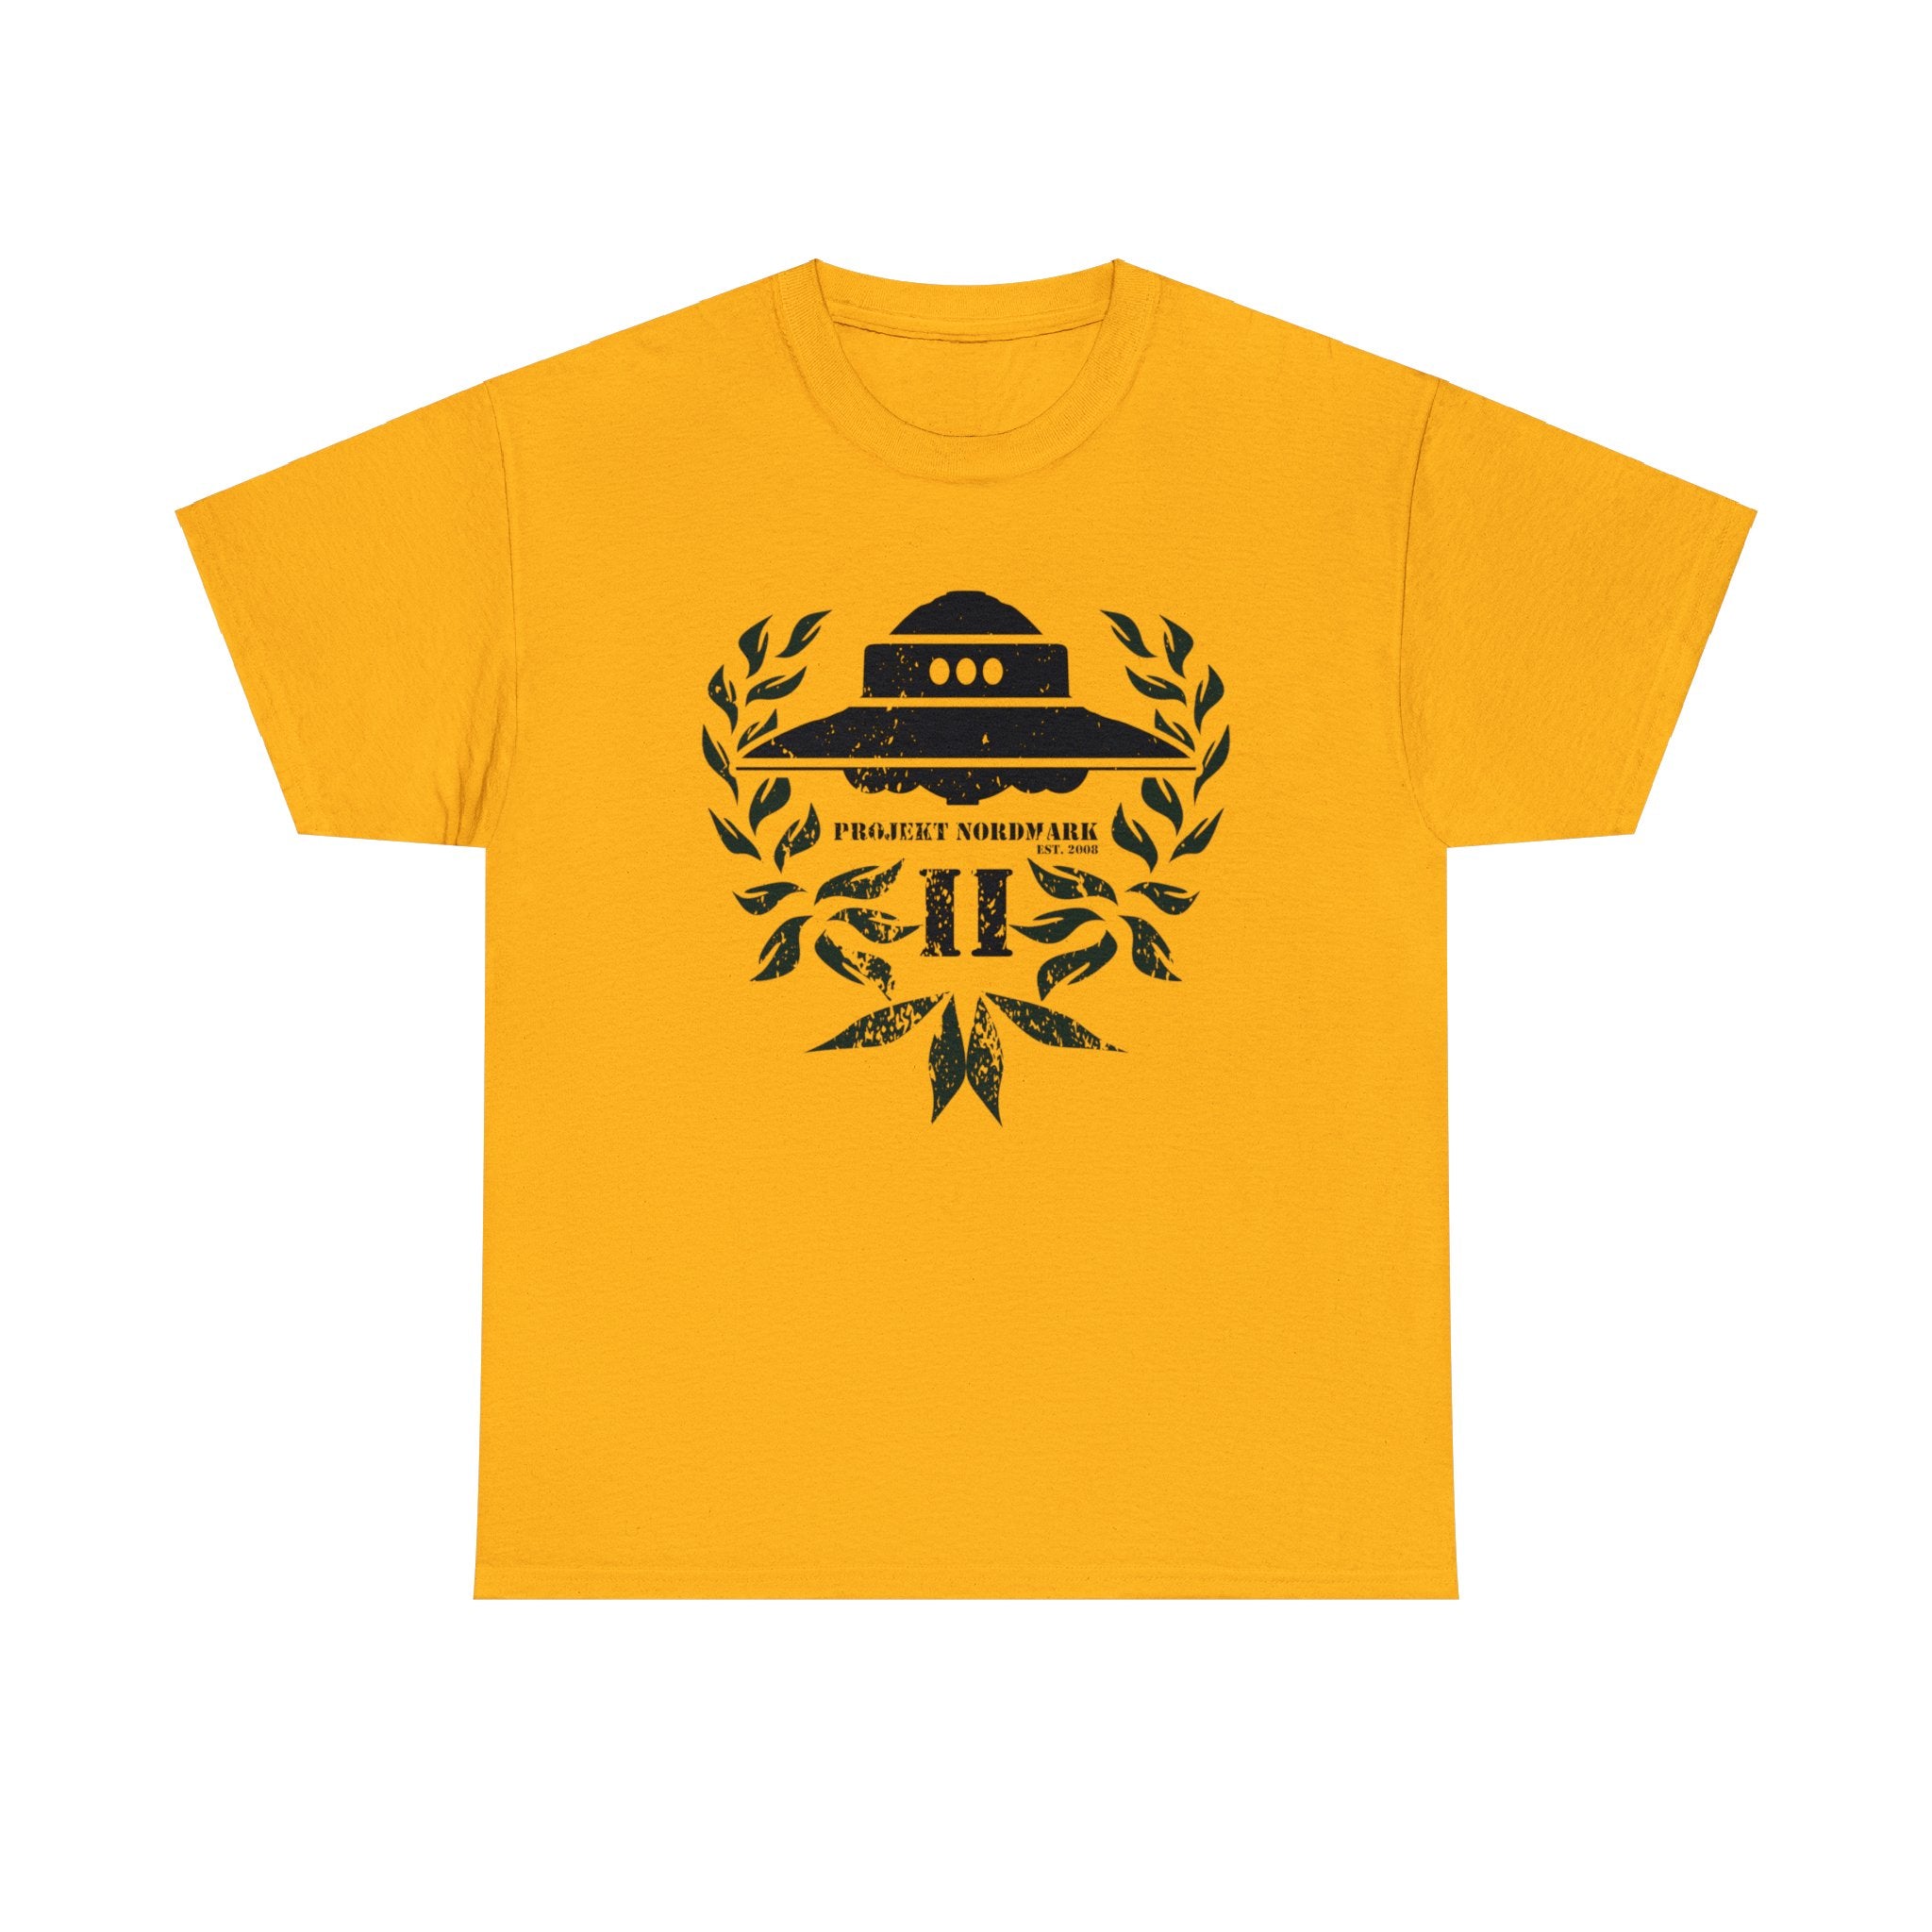 Haunebu 2 - PN - T-Shirt